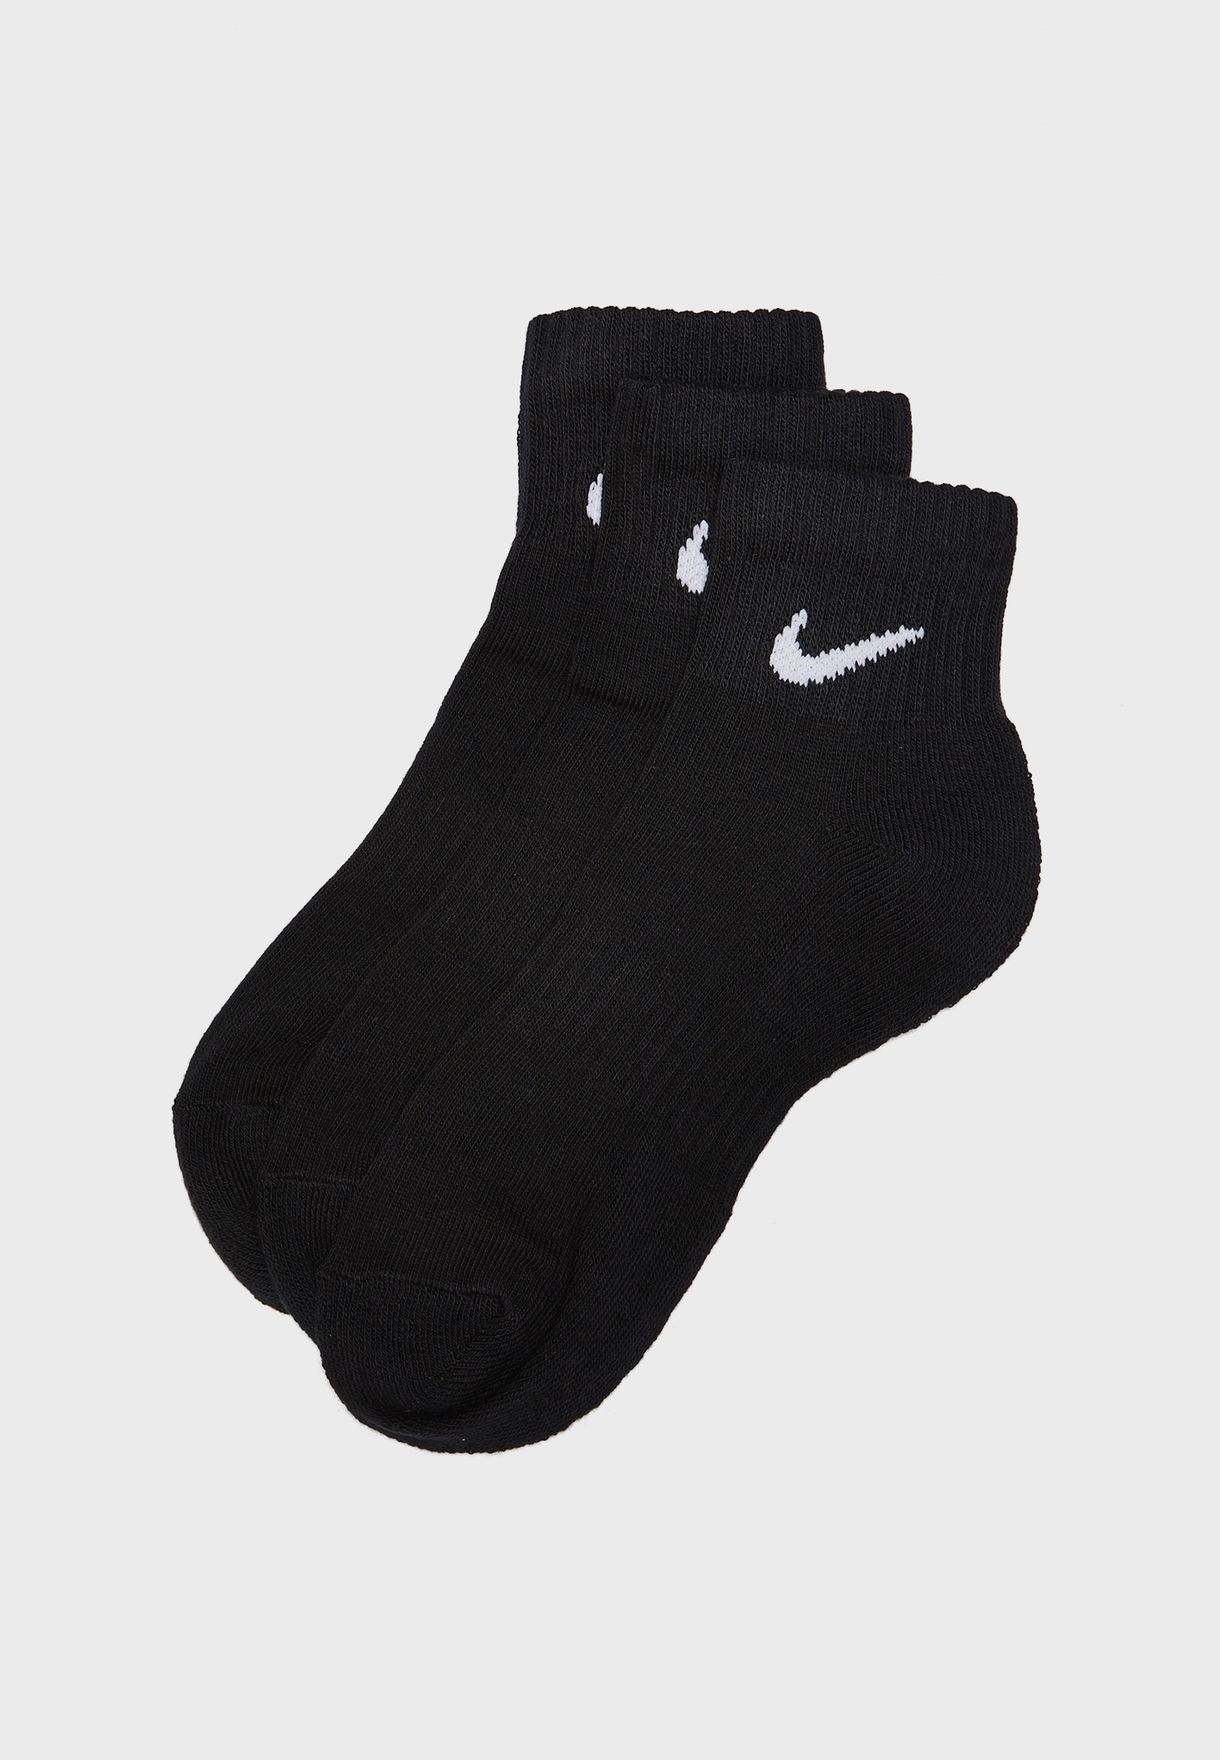 best place to buy nike socks